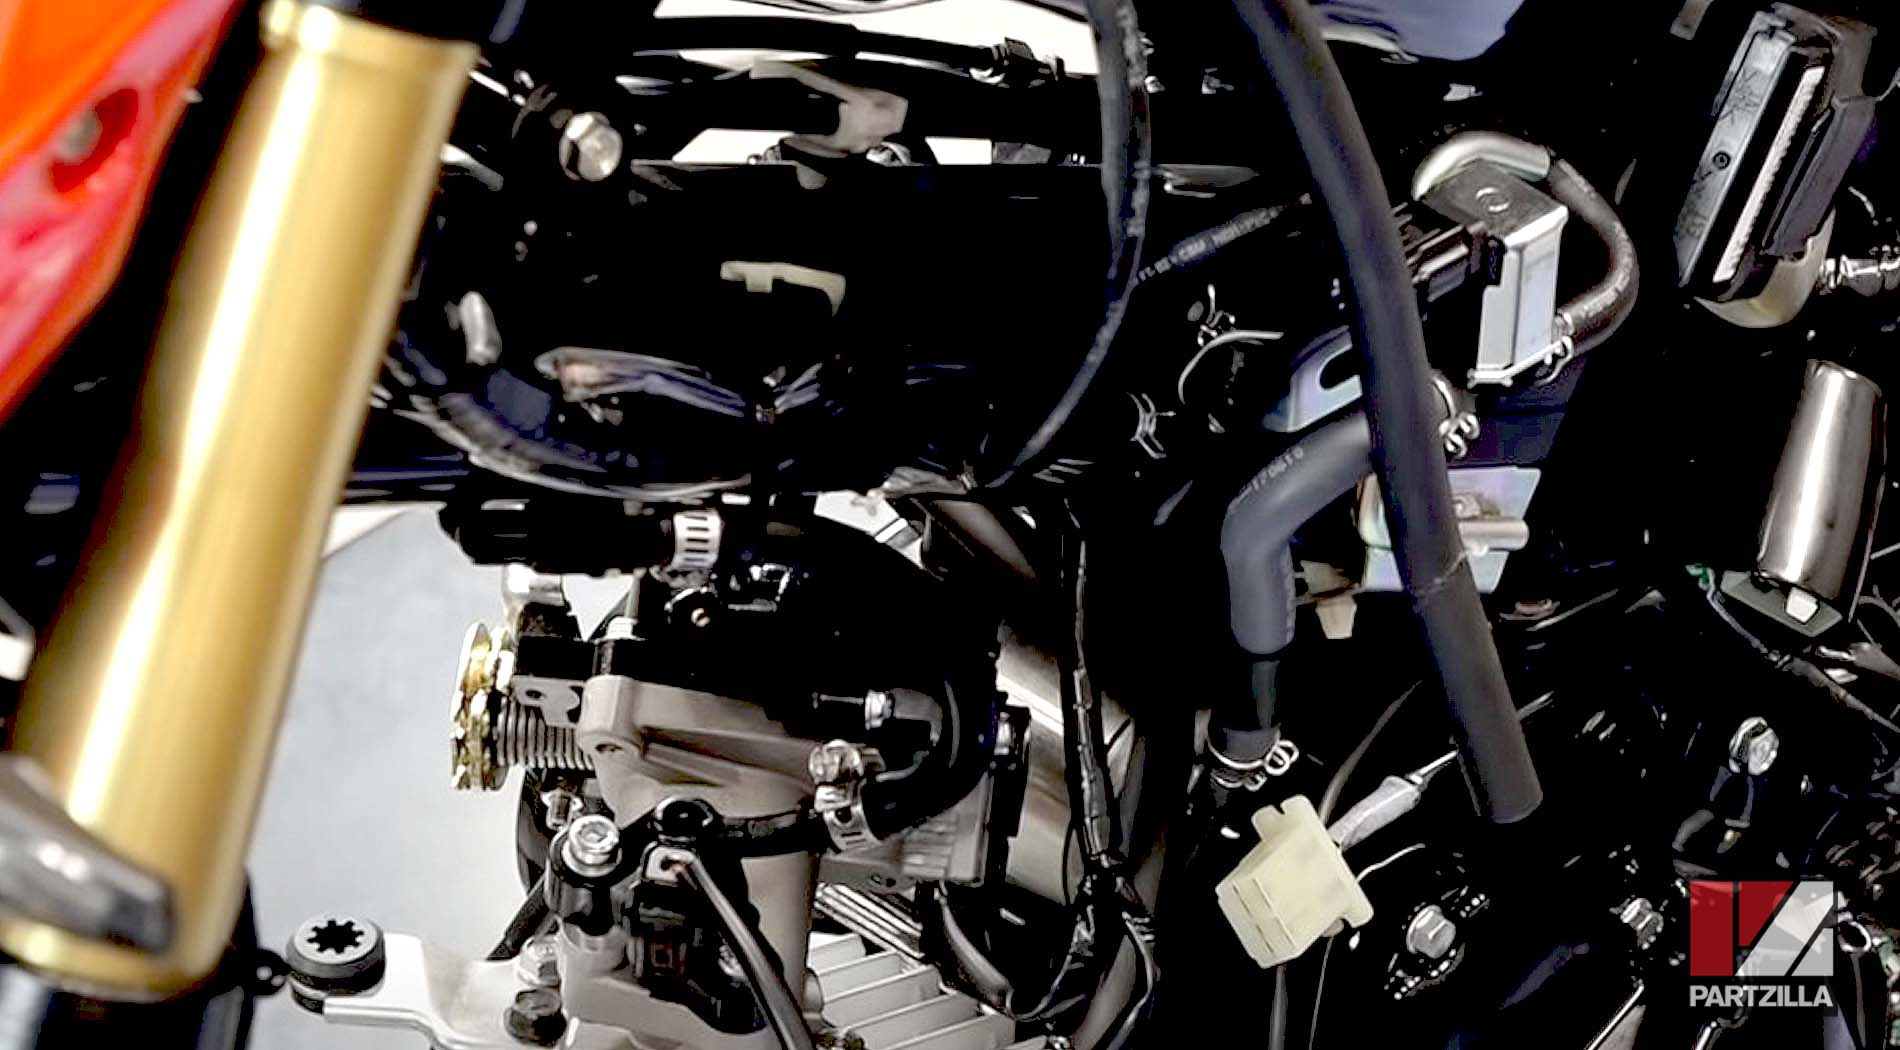 Honda Grom aftermaket throttle assembly upgrade installation